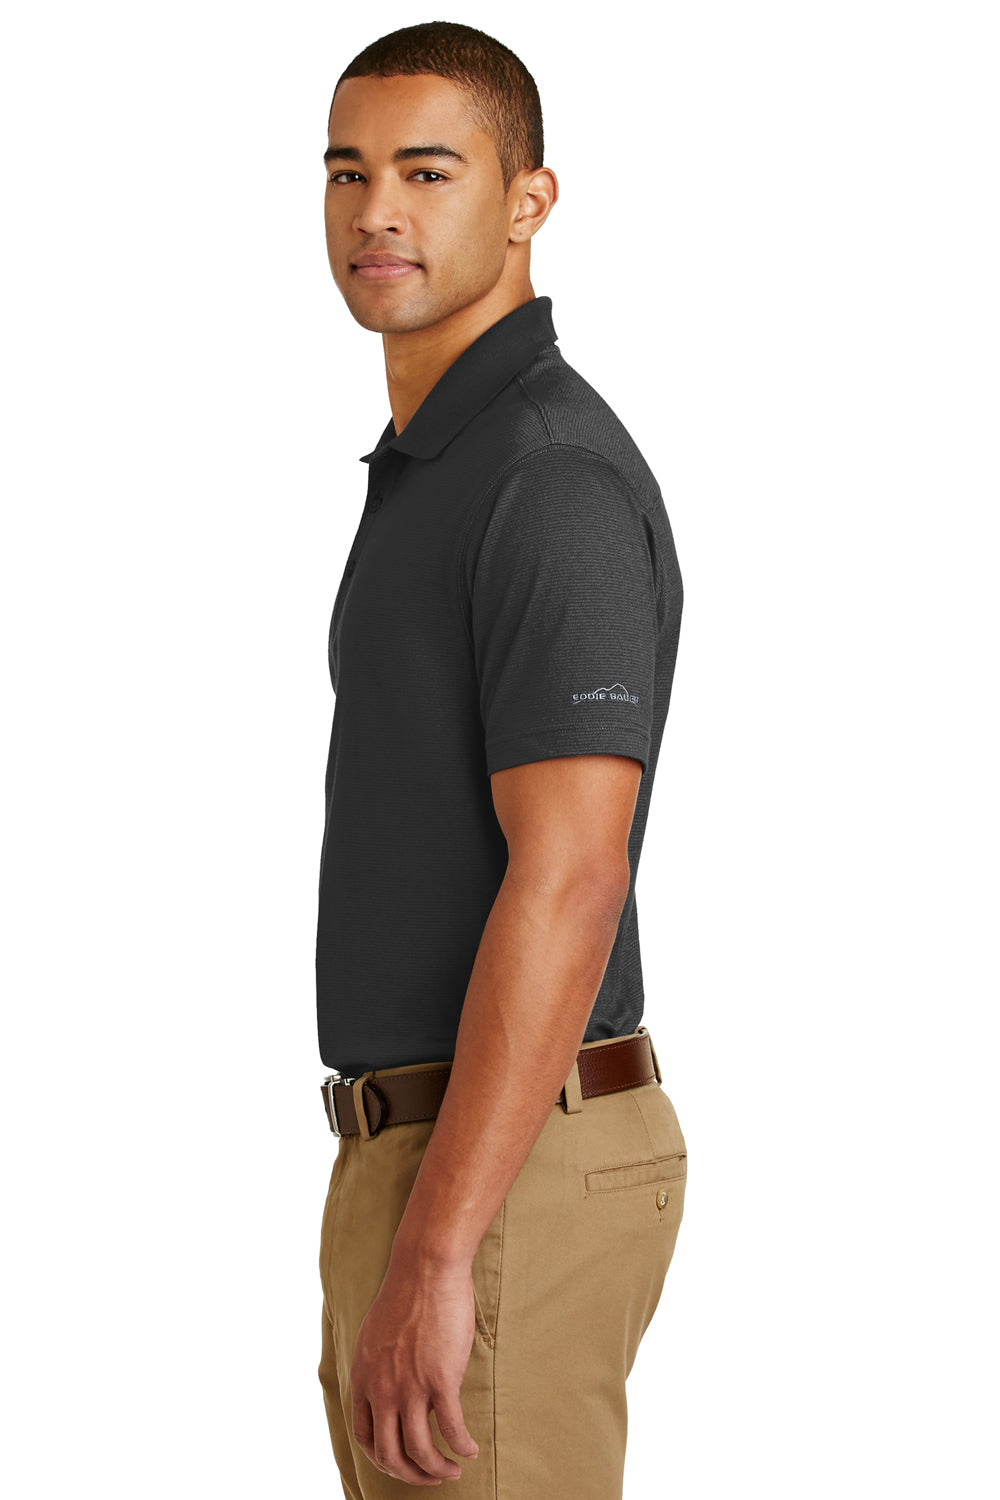 Eddie Bauer EB102 Mens Performance UV Protection Short Sleeve Polo Shirt Black Model Side